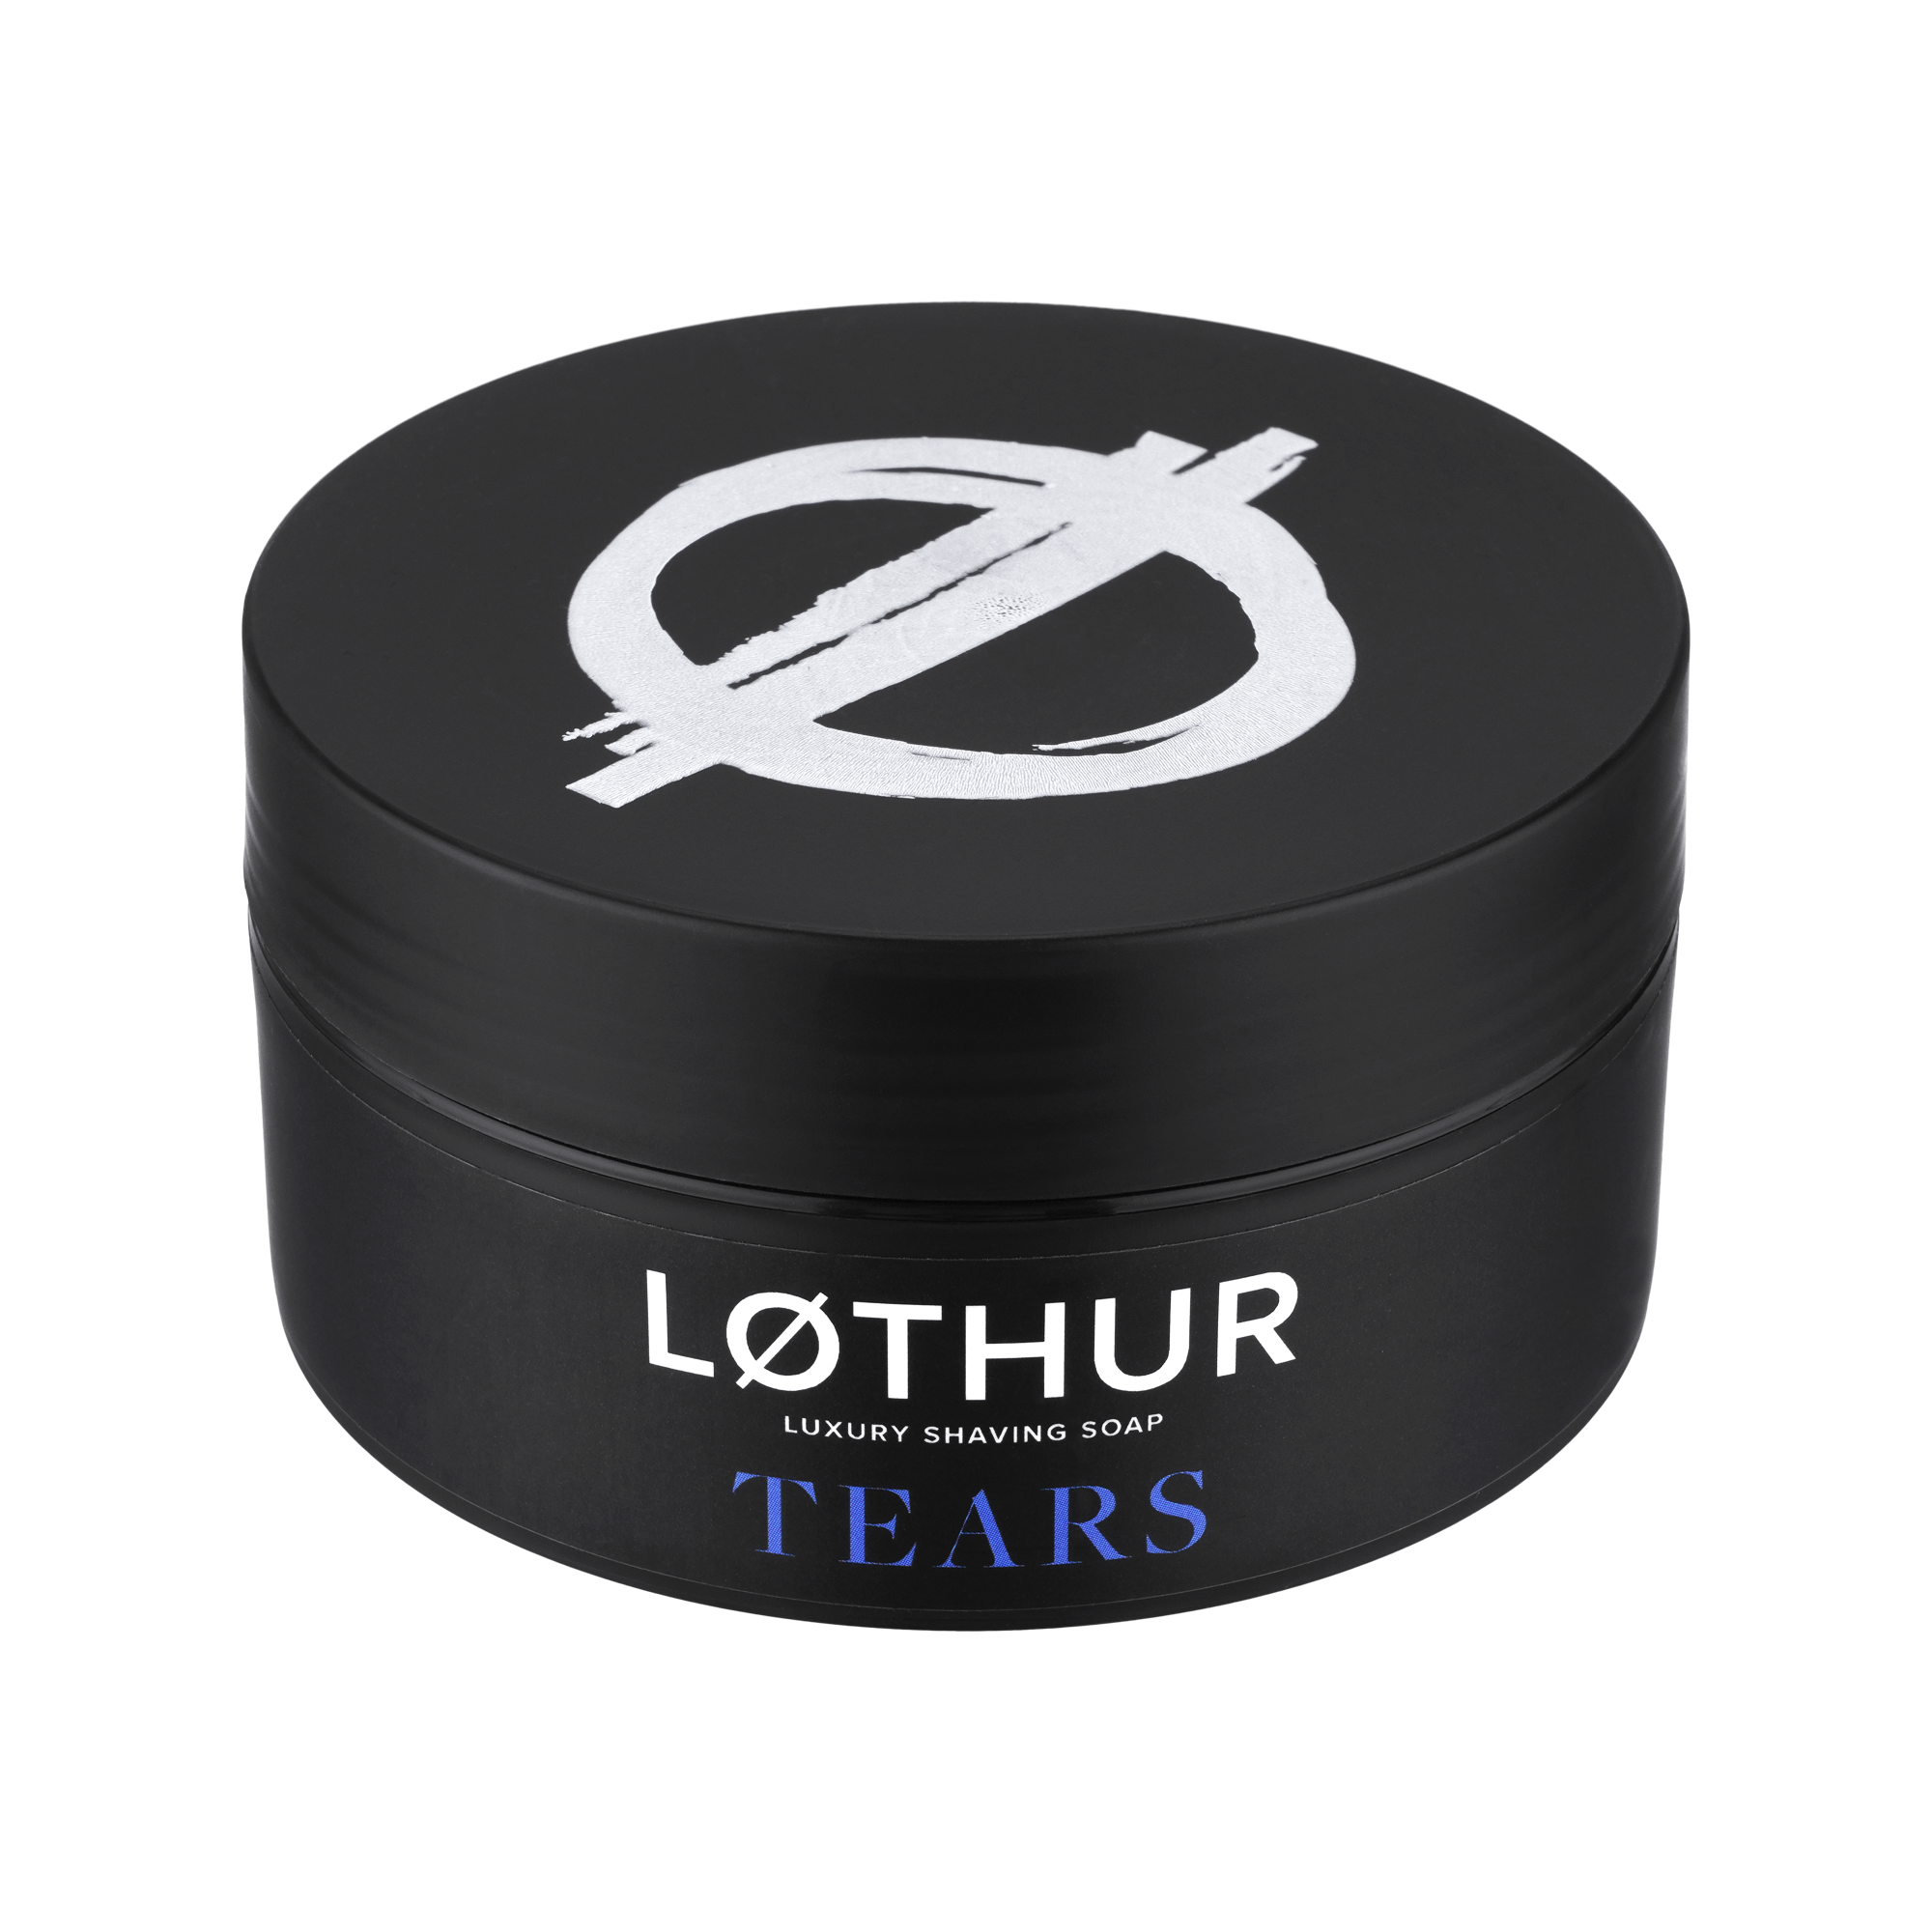 Lothur Tears Shaving Soap